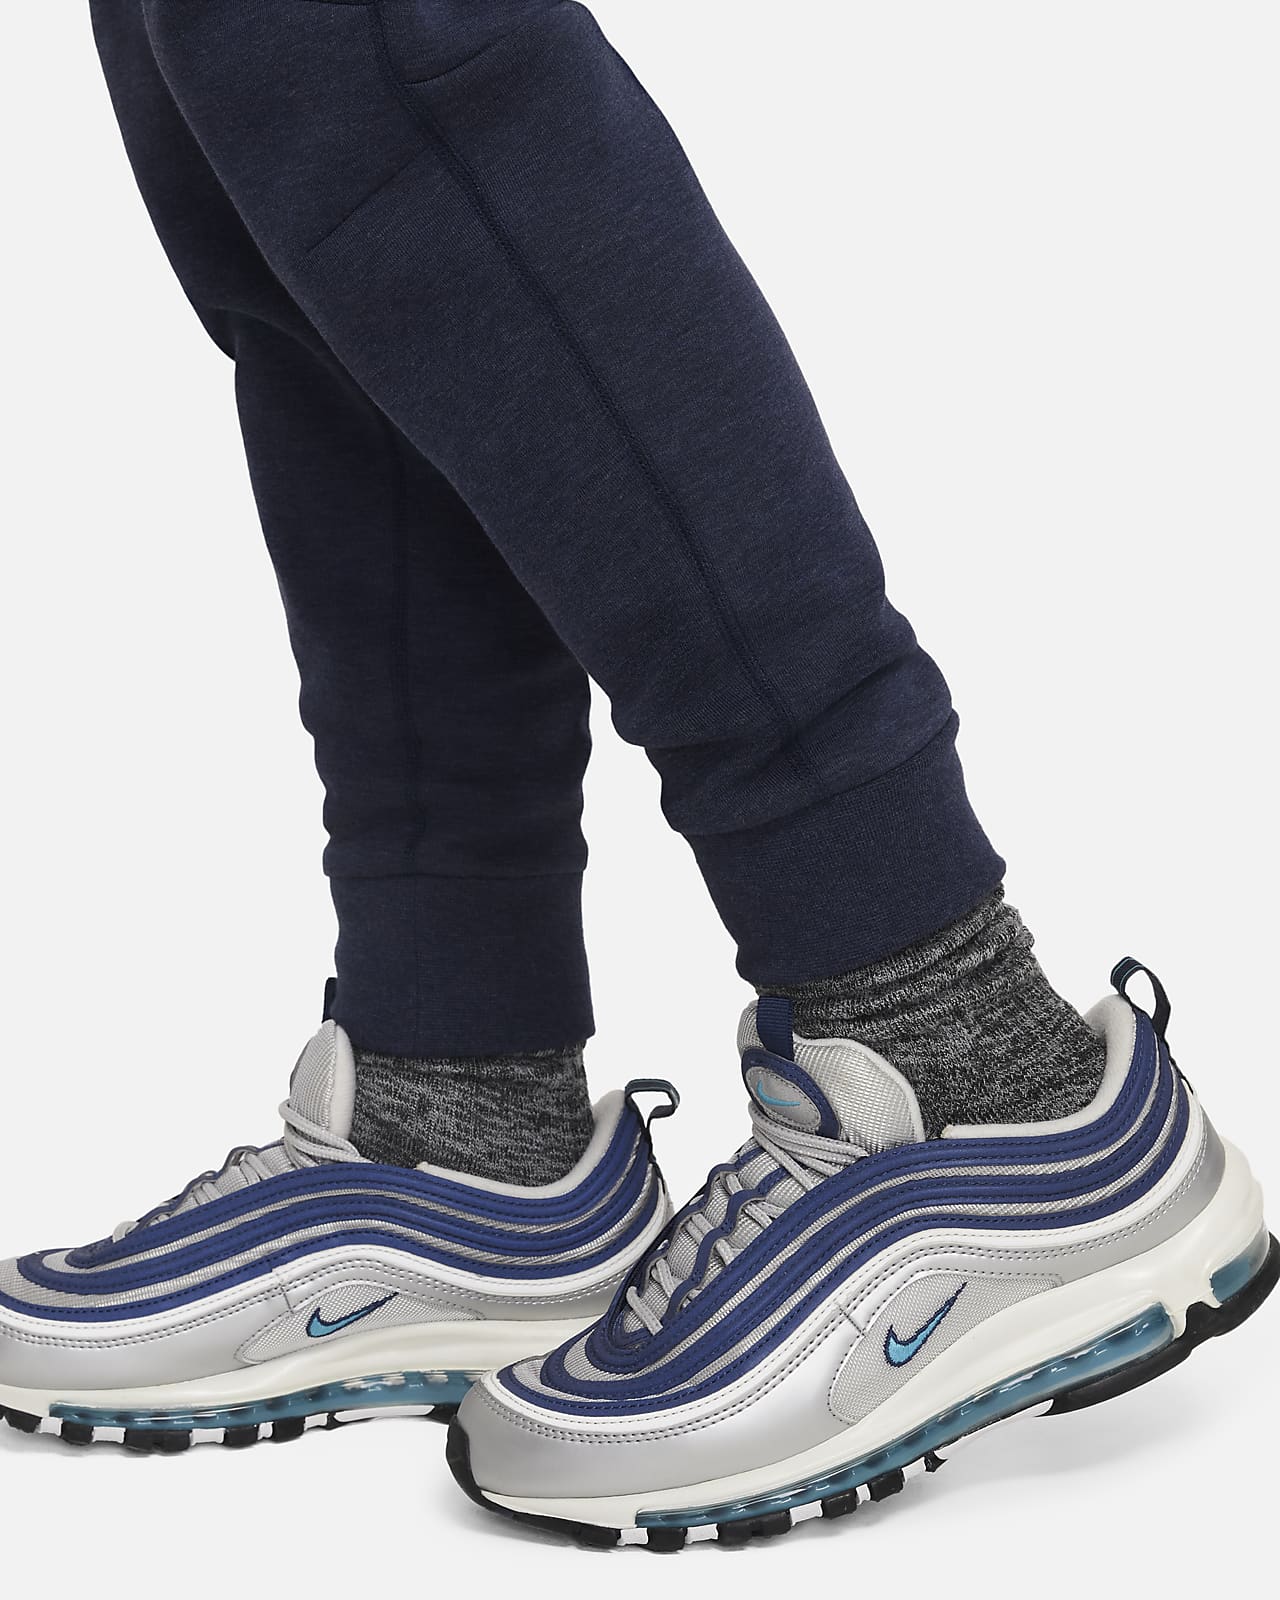 Nike Snow Pants Boys Large Solid Blue Pull On Elastic Waist Drawstring  23x26 